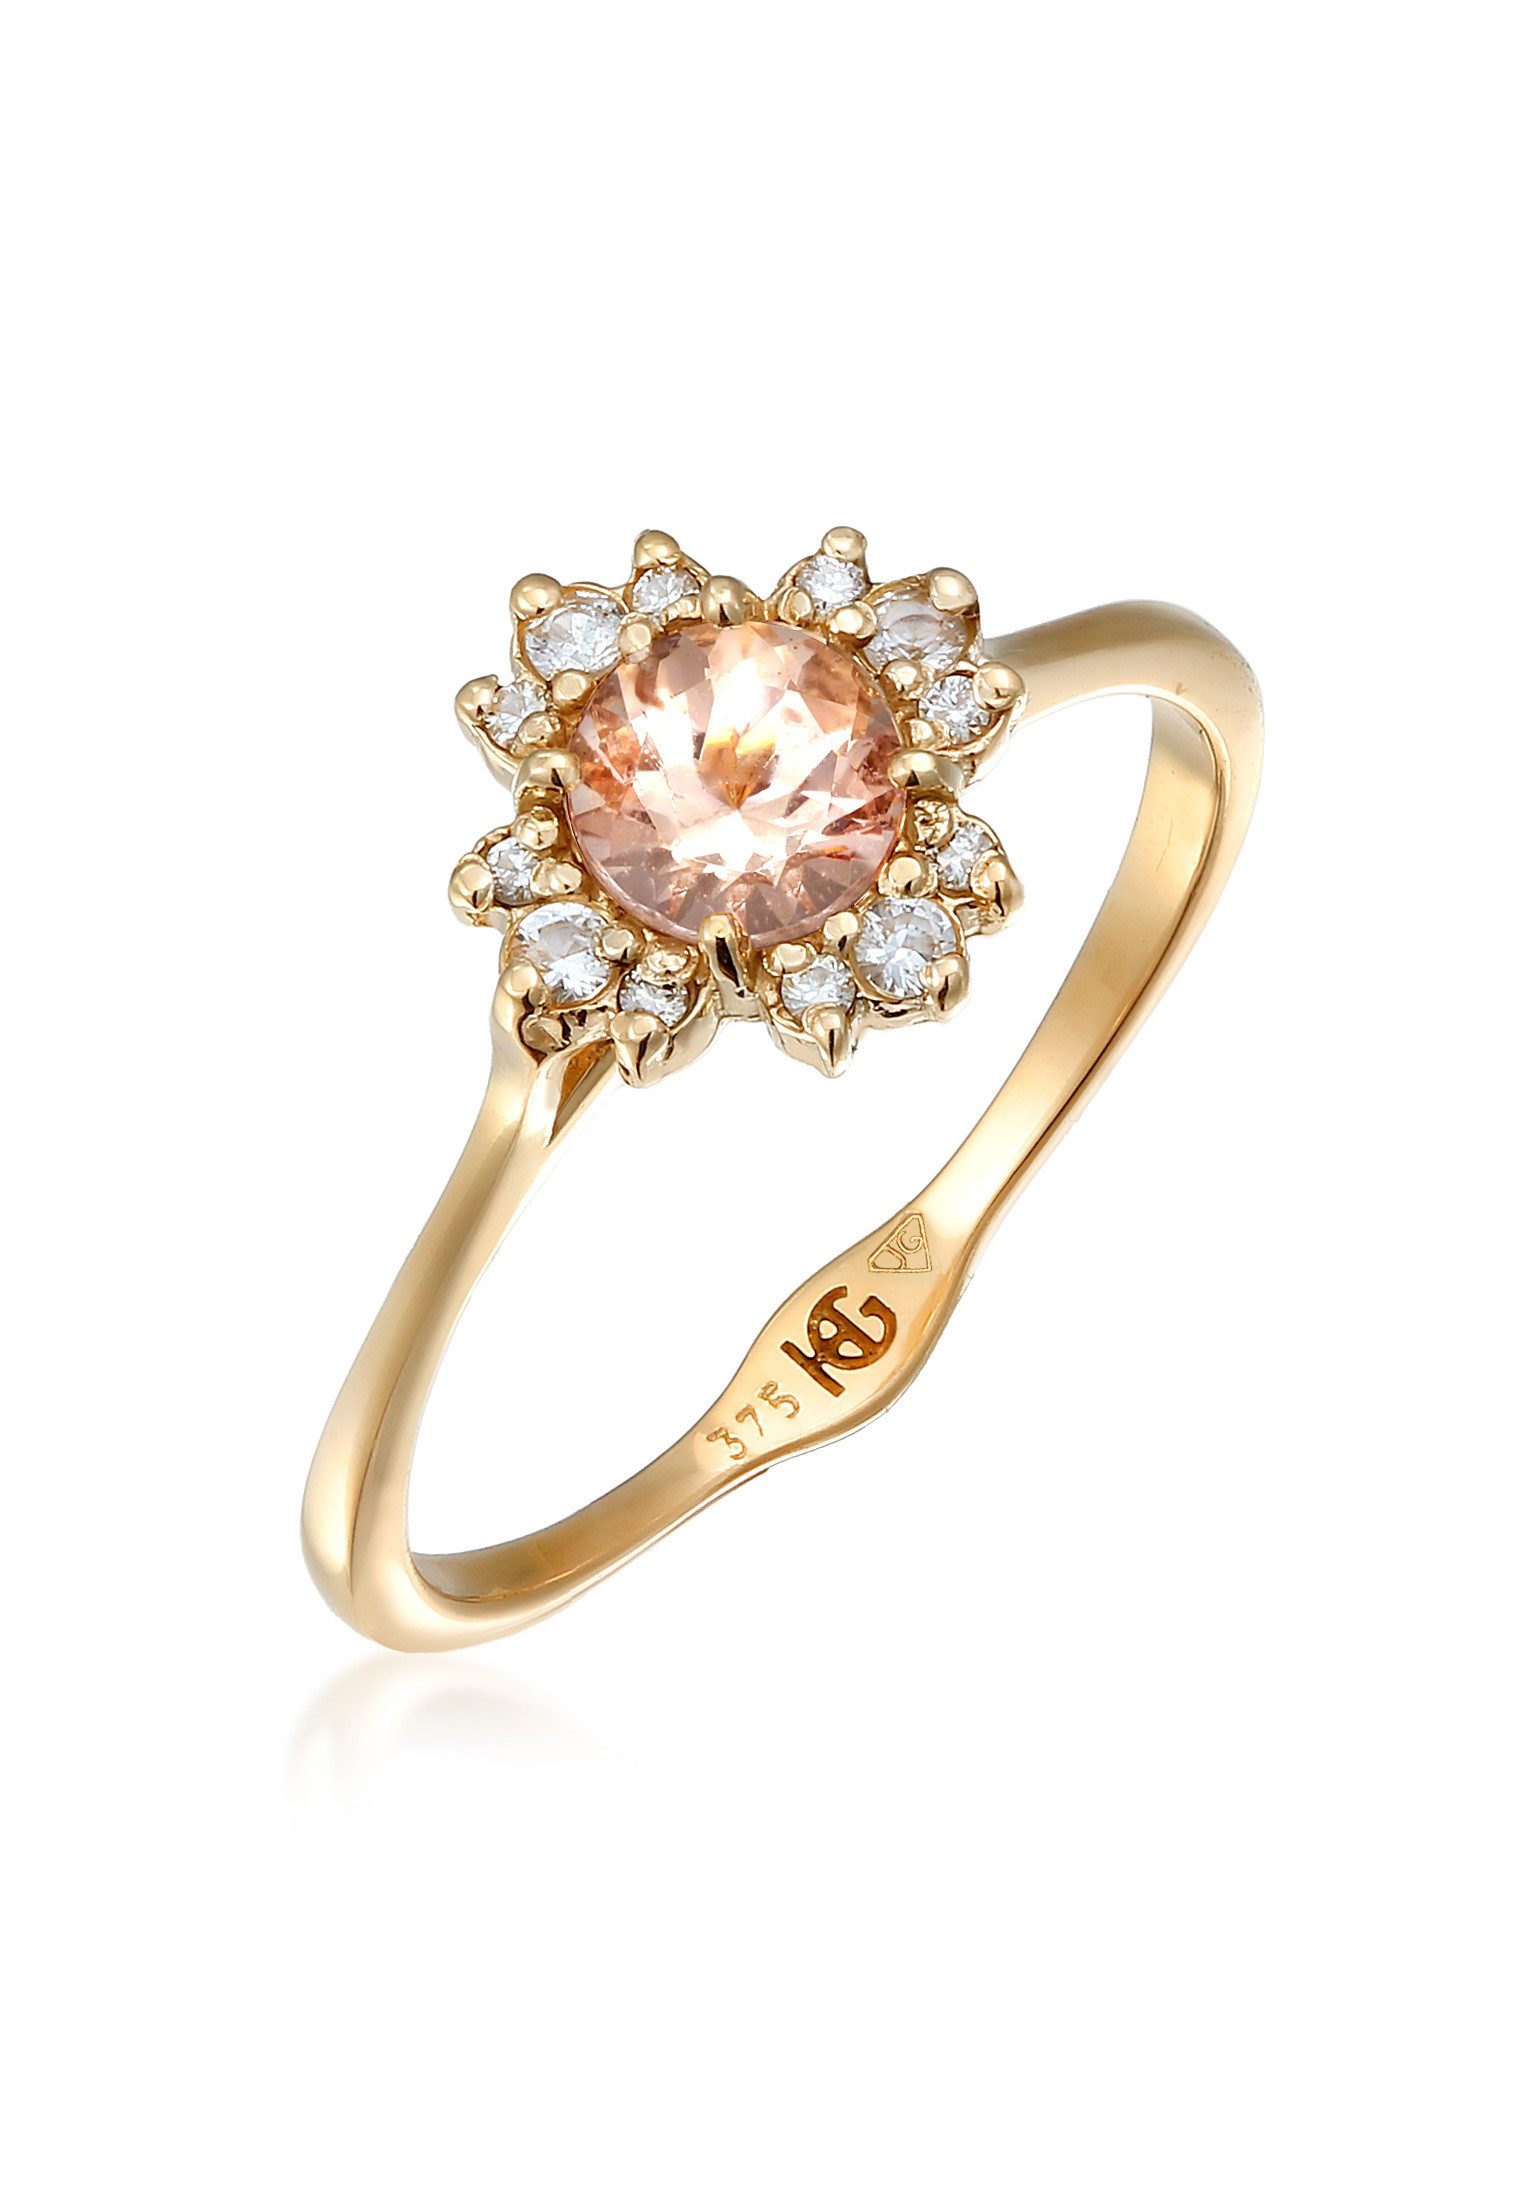 HAZE & GLORY Verlobungsring Diamant Morganit Verlobungsring 375 Gelbgold